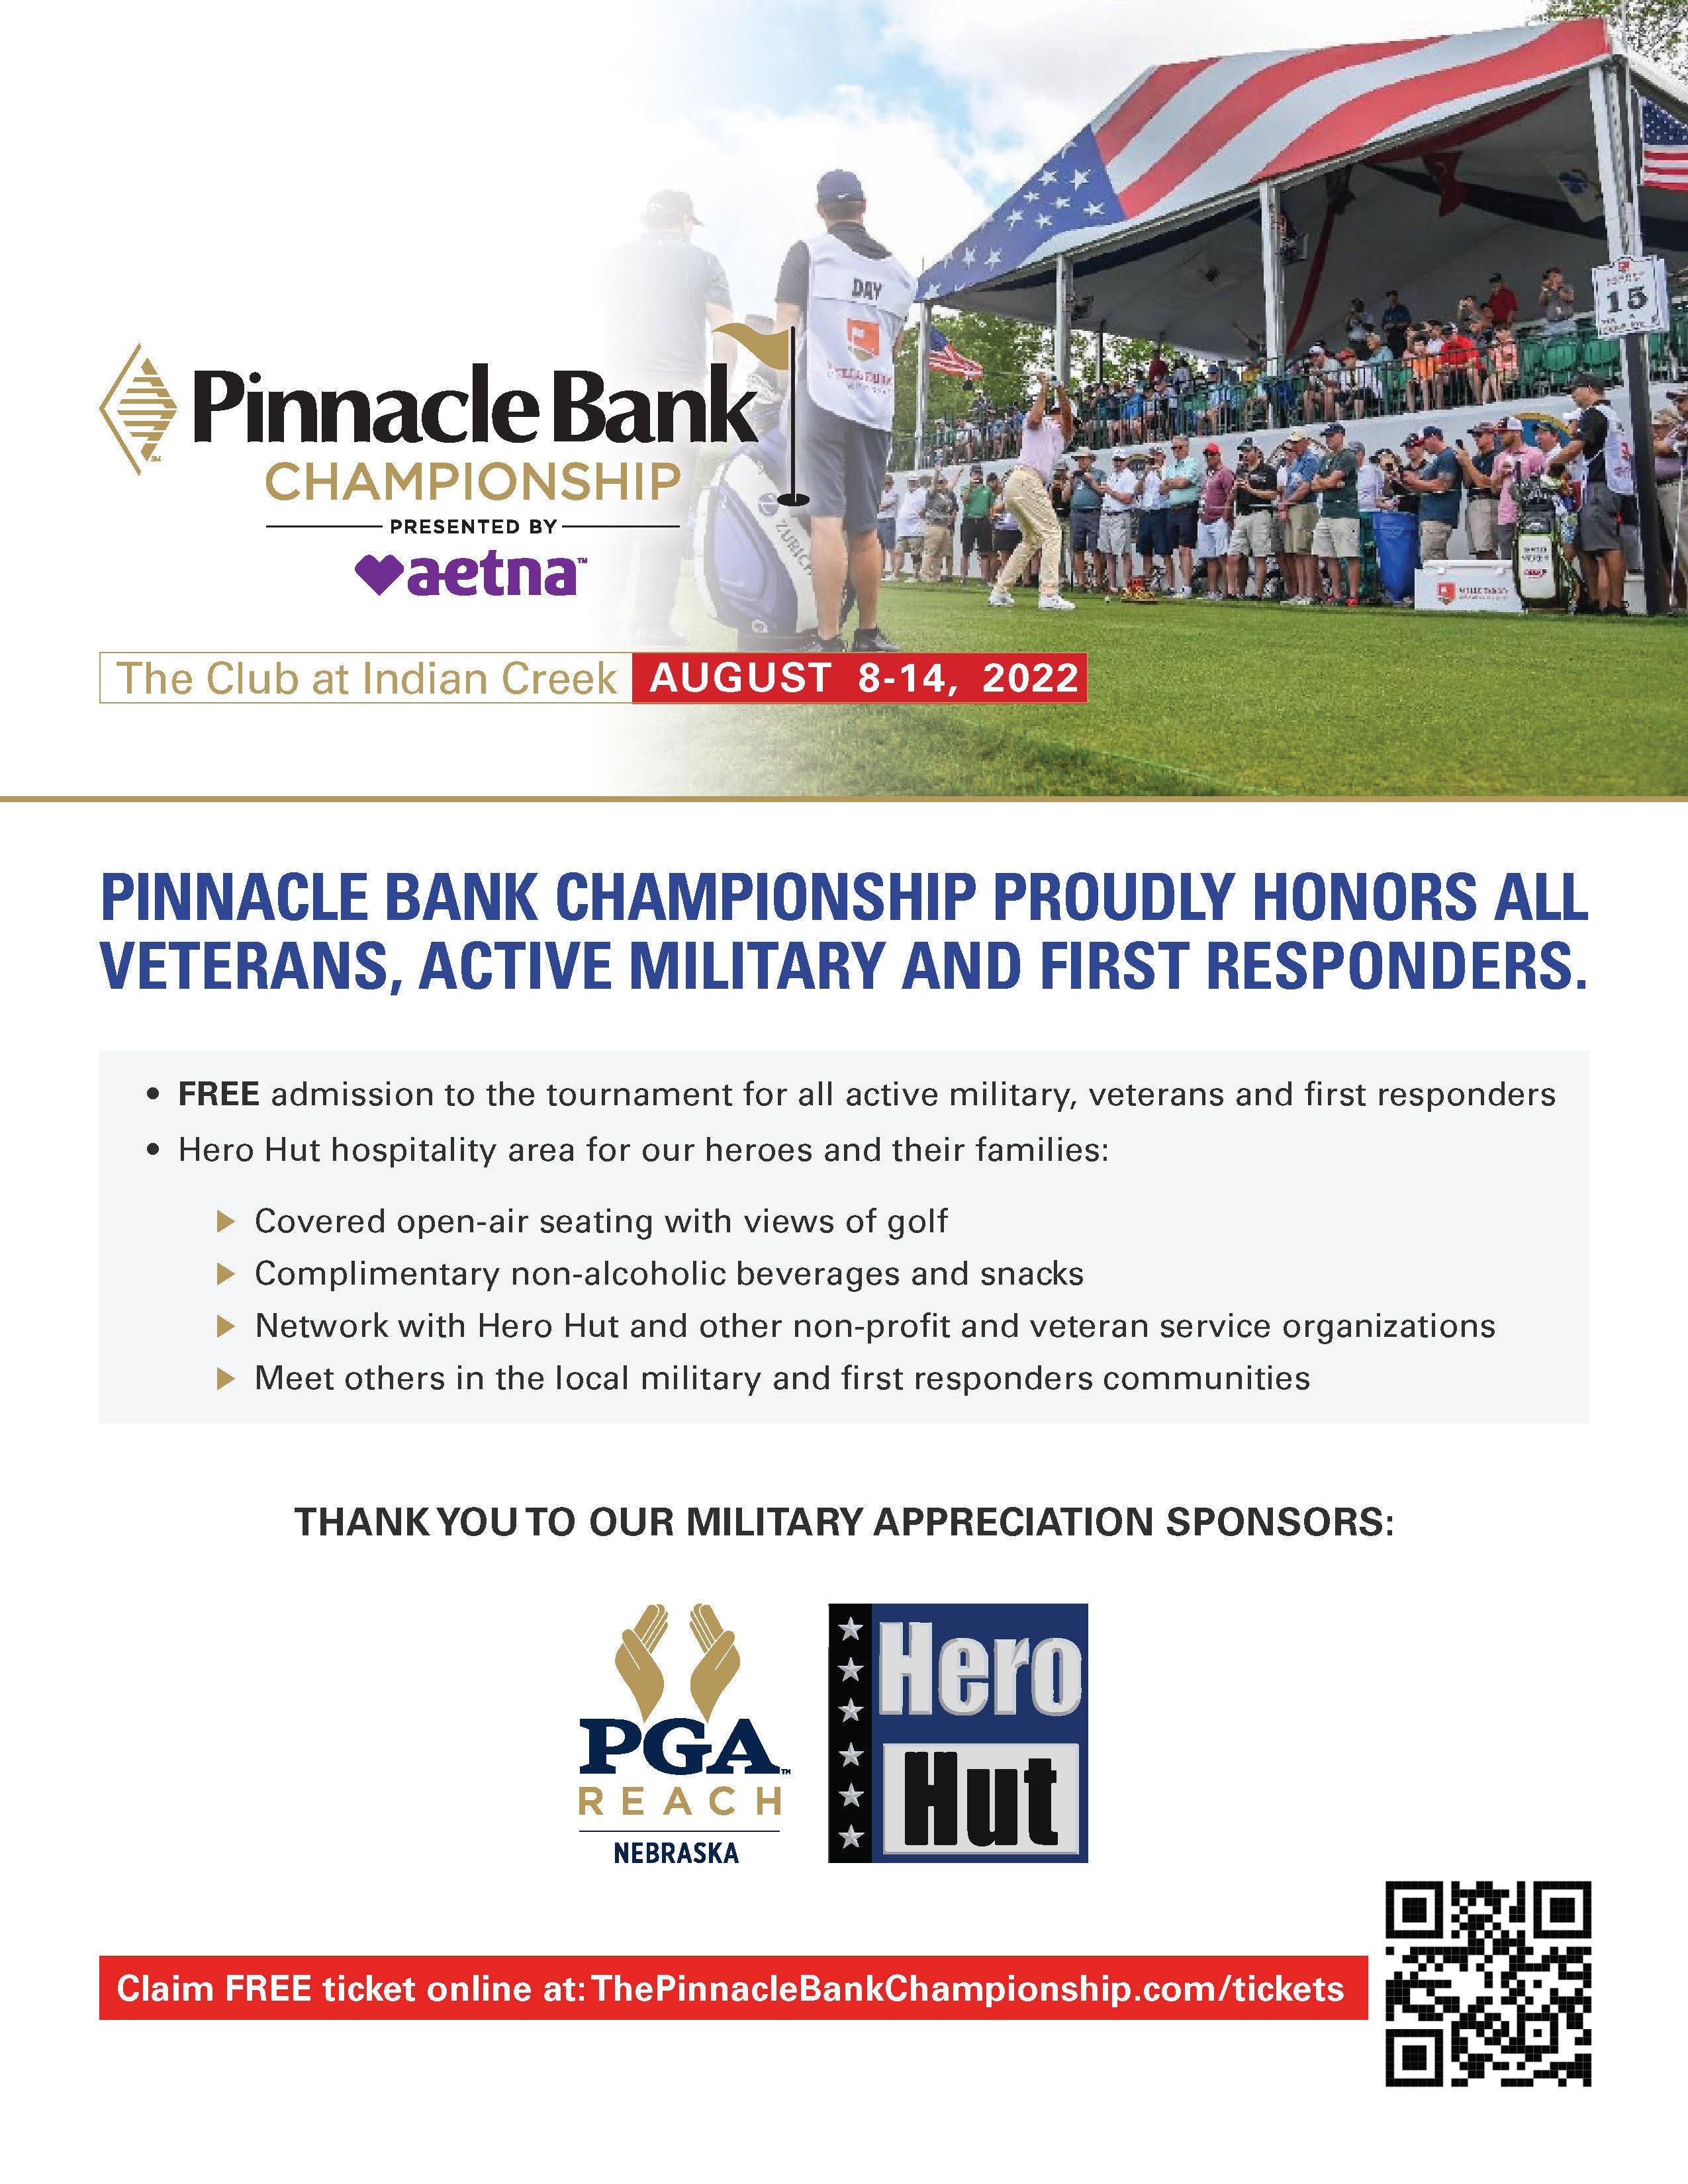 Pinnacle Bank Championship FREE ADMISSION FOR VETERANS Nebraska